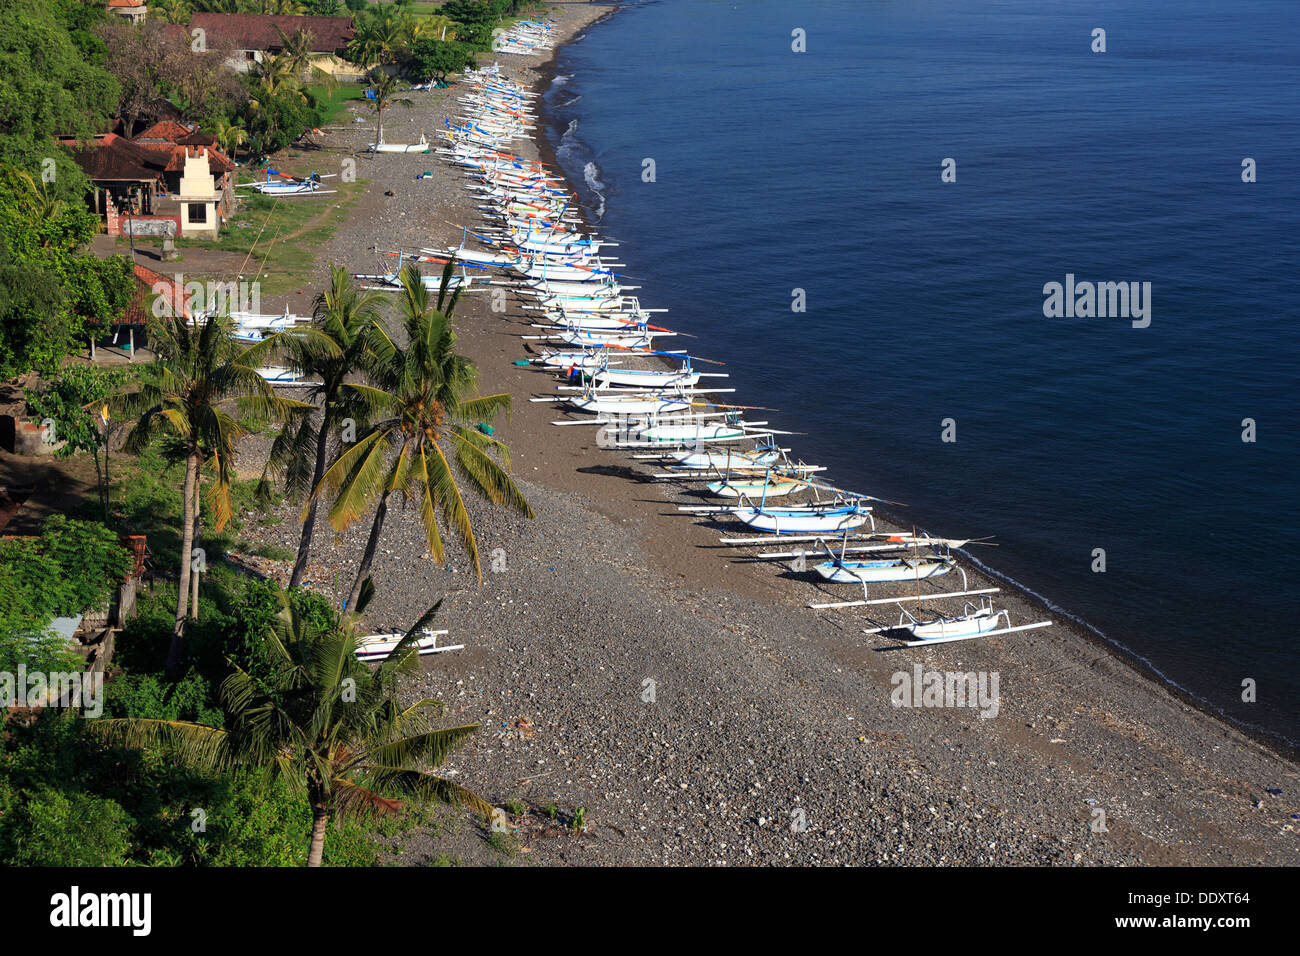 Indonesia, Bali, East Bali, Amed, Lipah Village and Beach Stock Photo -  Alamy